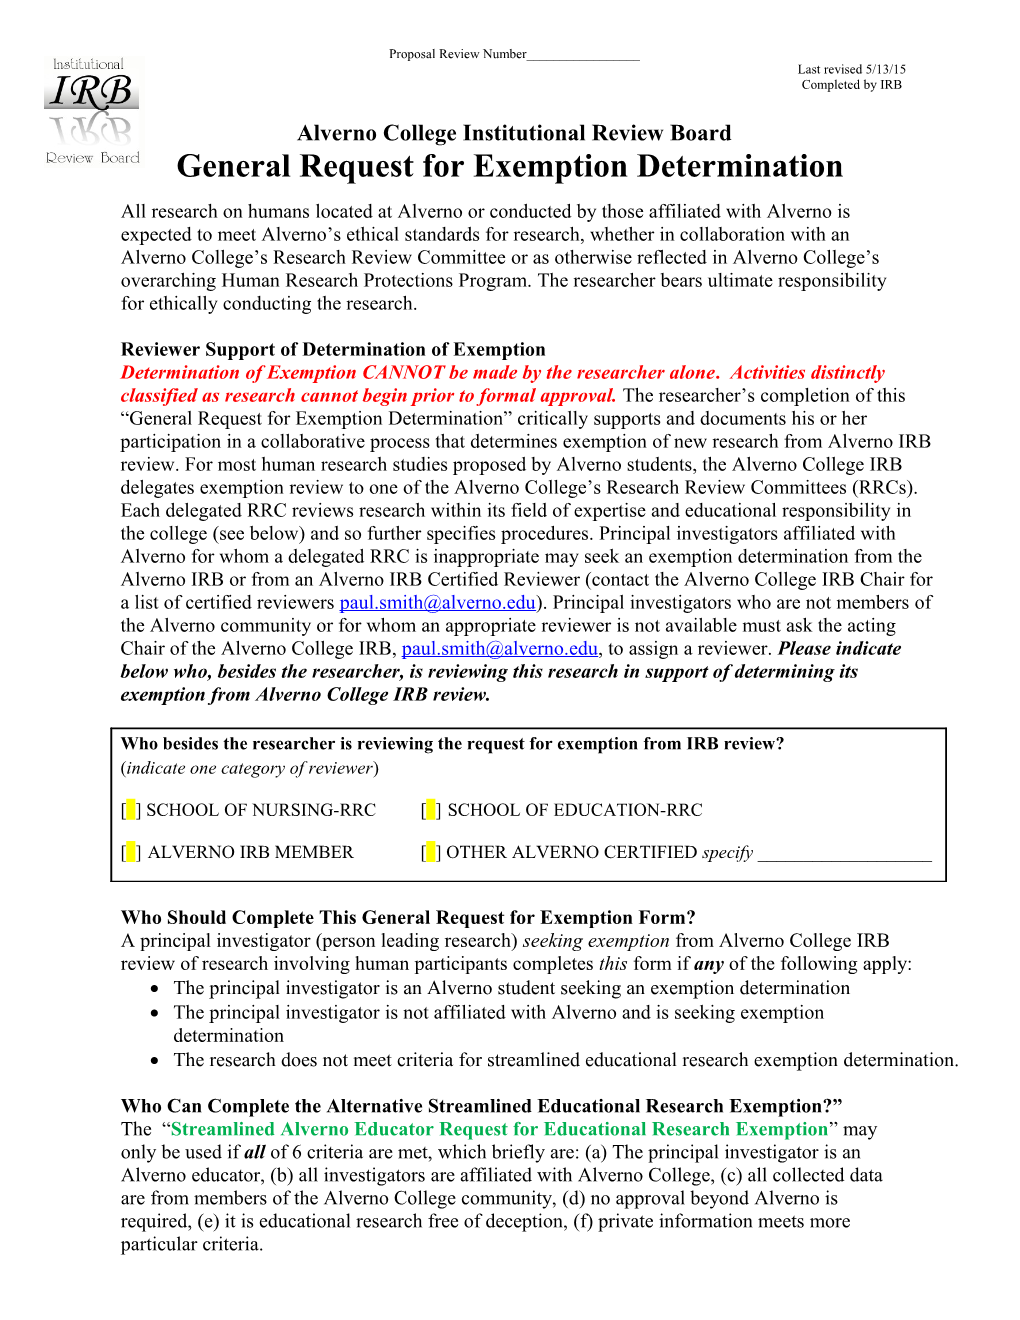 General Request for Exemption Determination